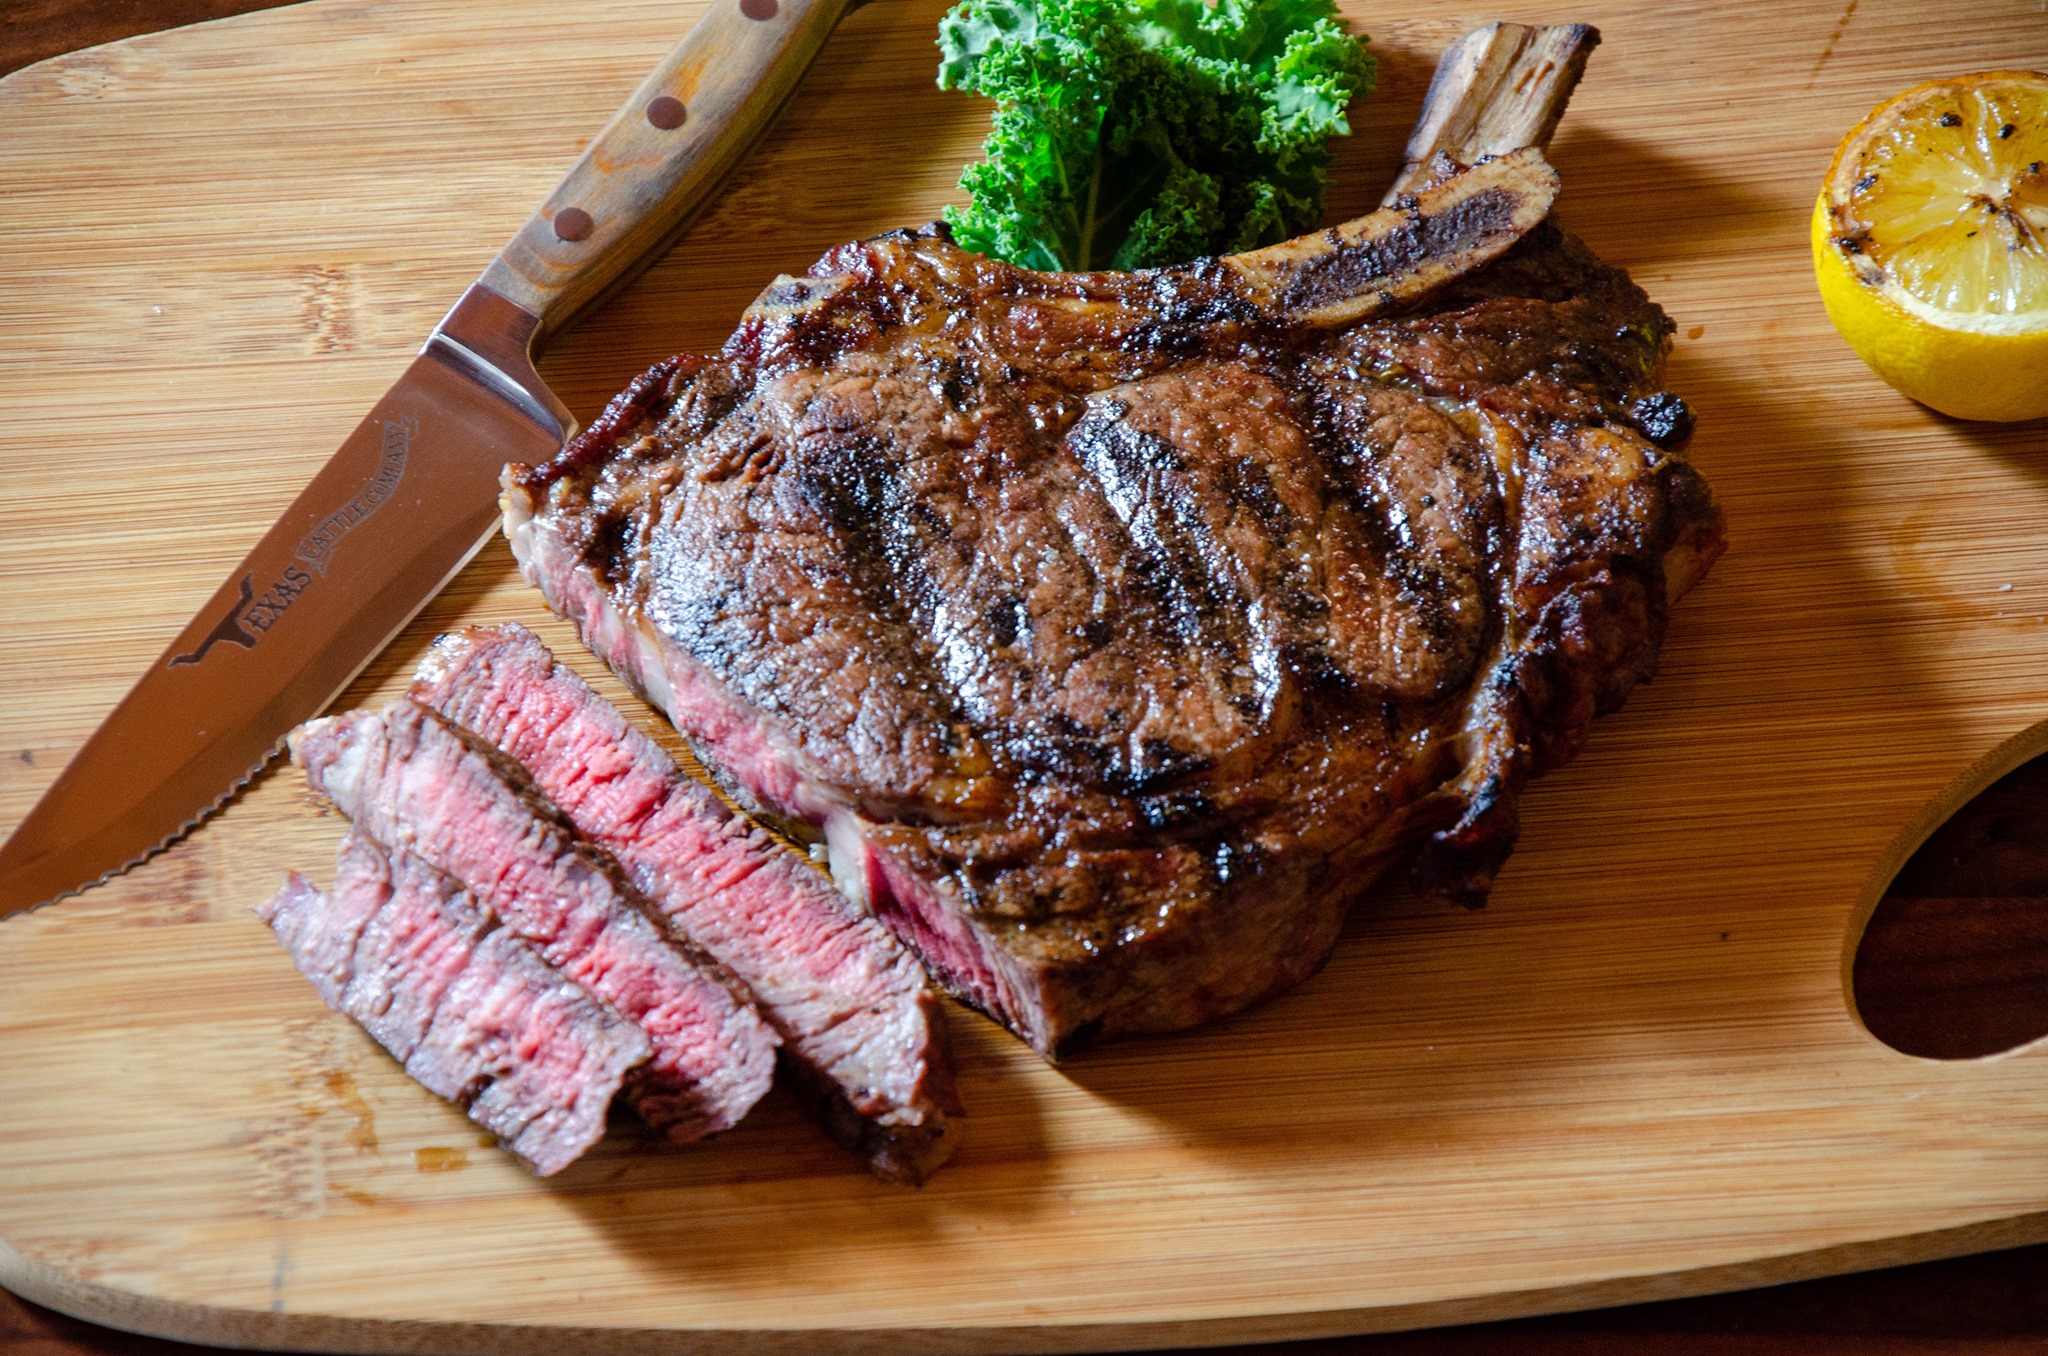 Steak cut up at texas cattle company in lakeland, fl